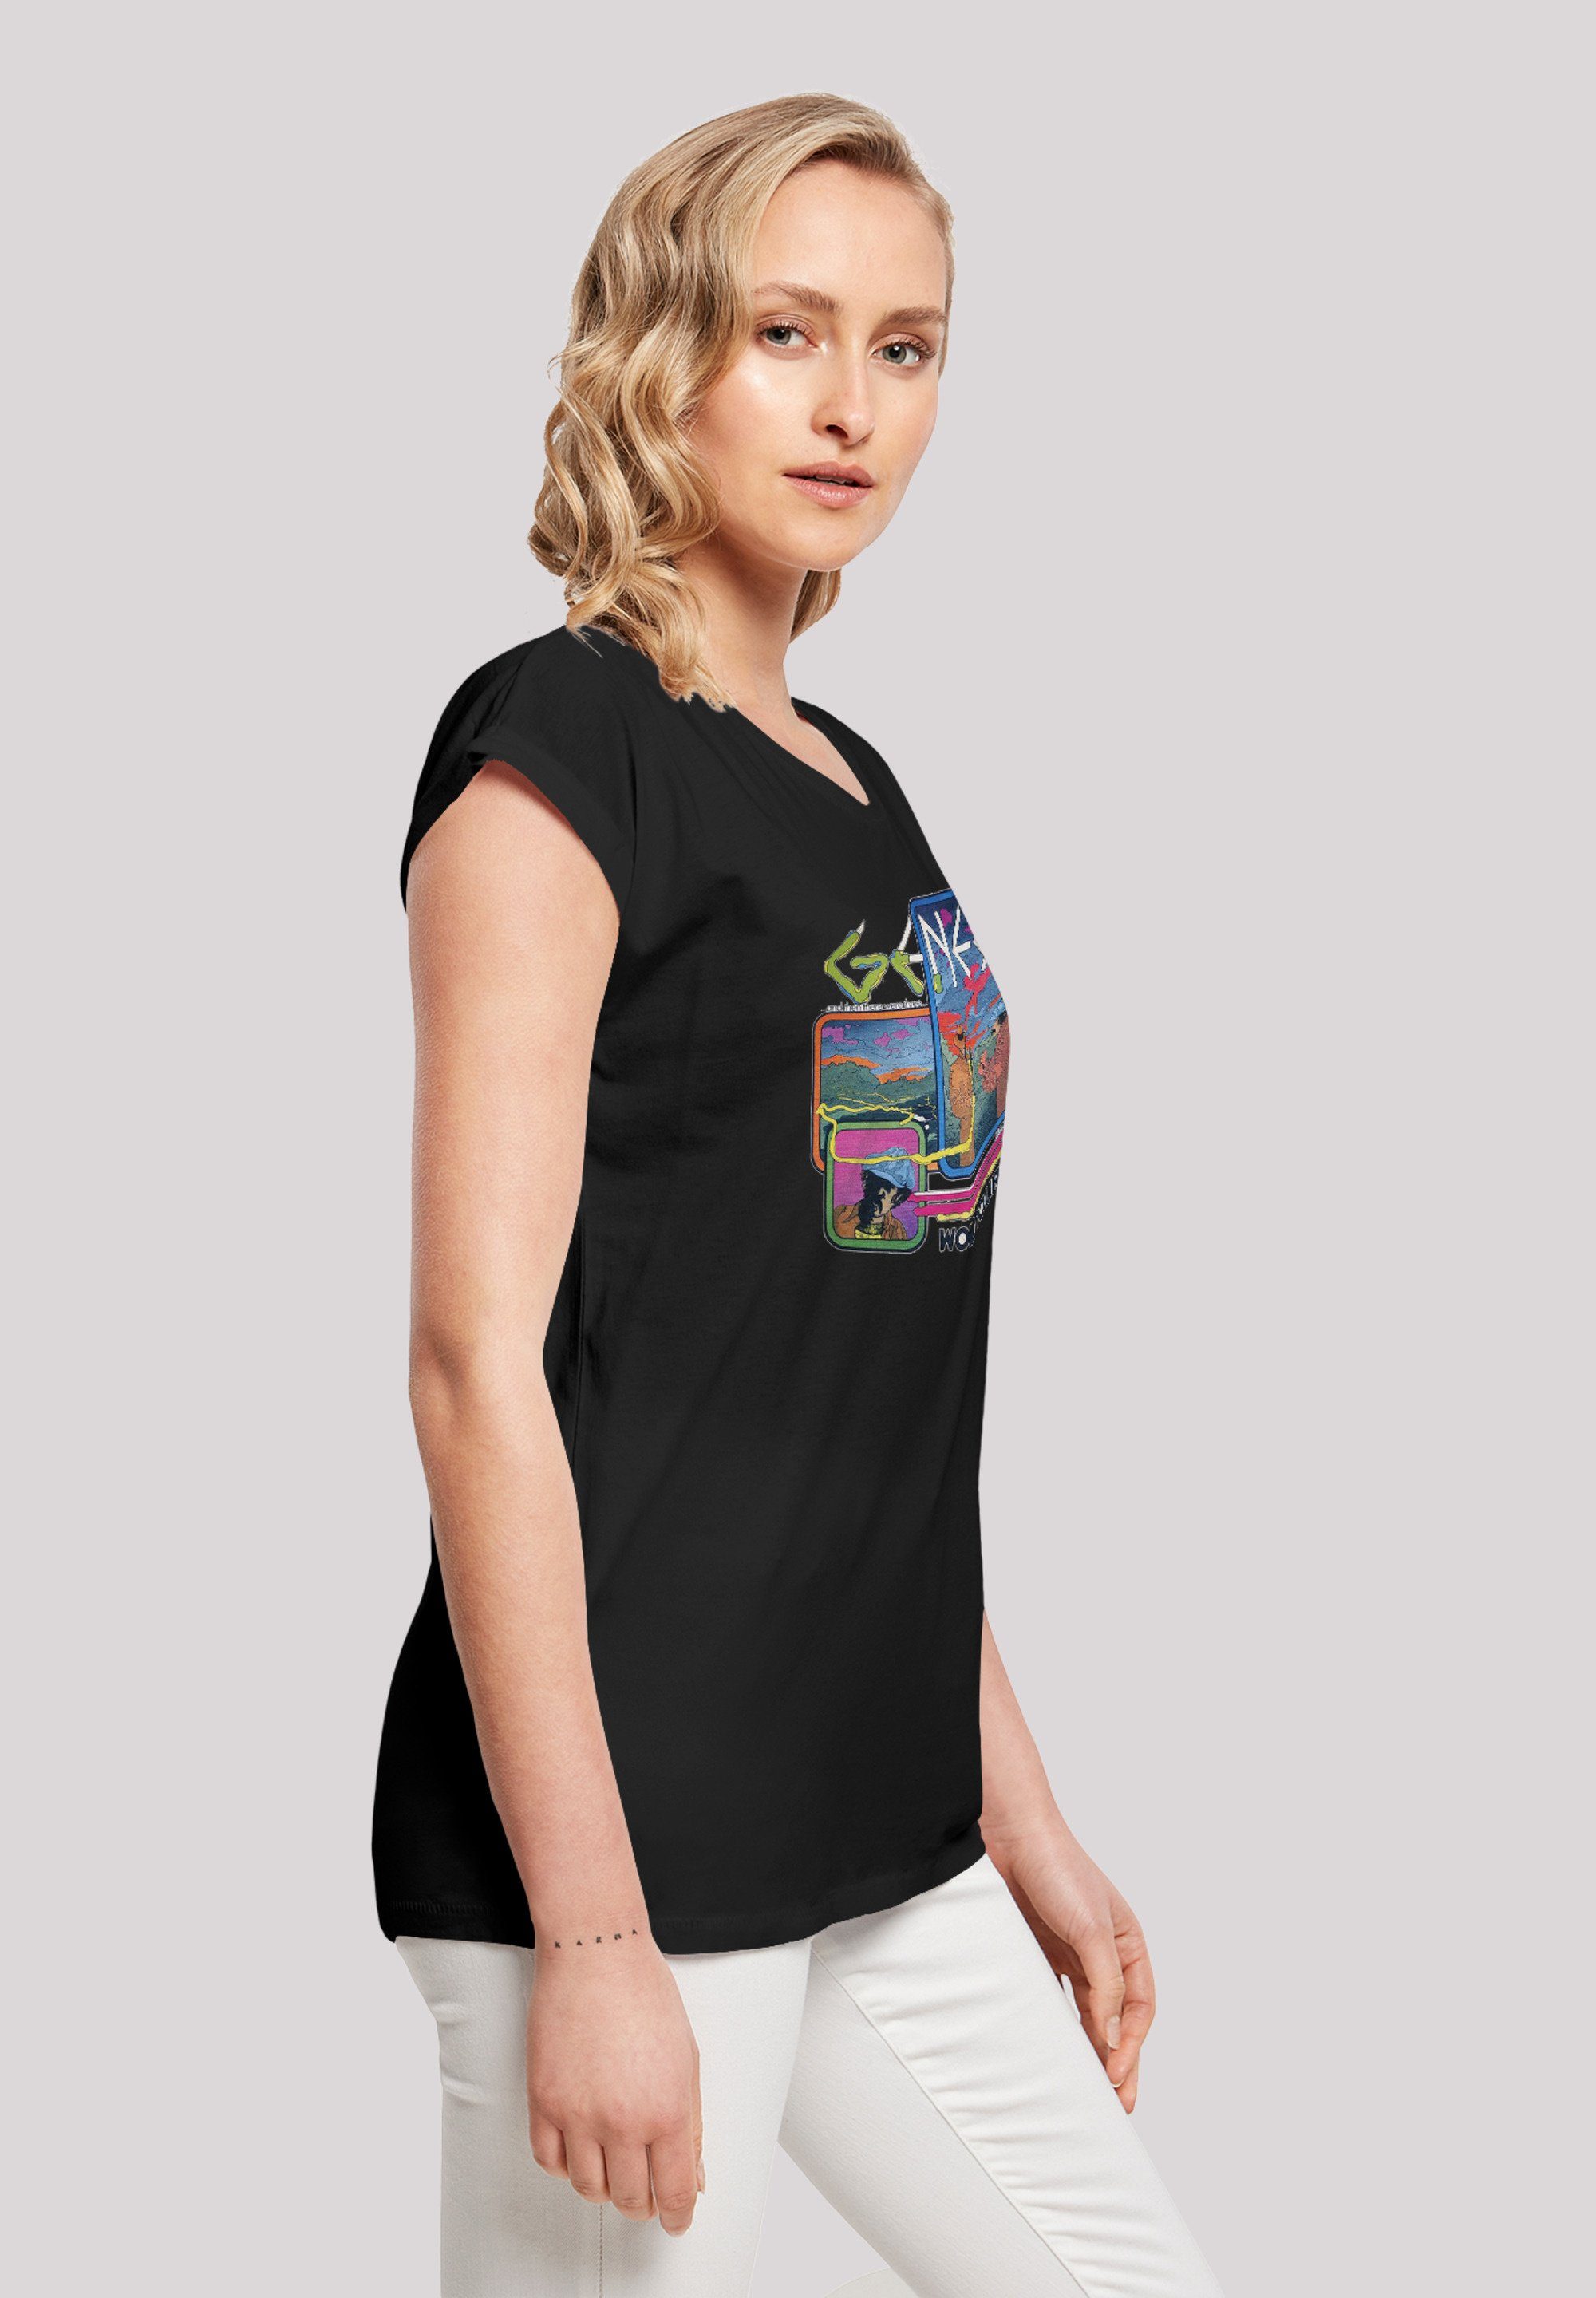 Damen Shirts F4NT4STIC T-Shirt Extended Shoulder T-Shirt 'Genesis World Tour 78'